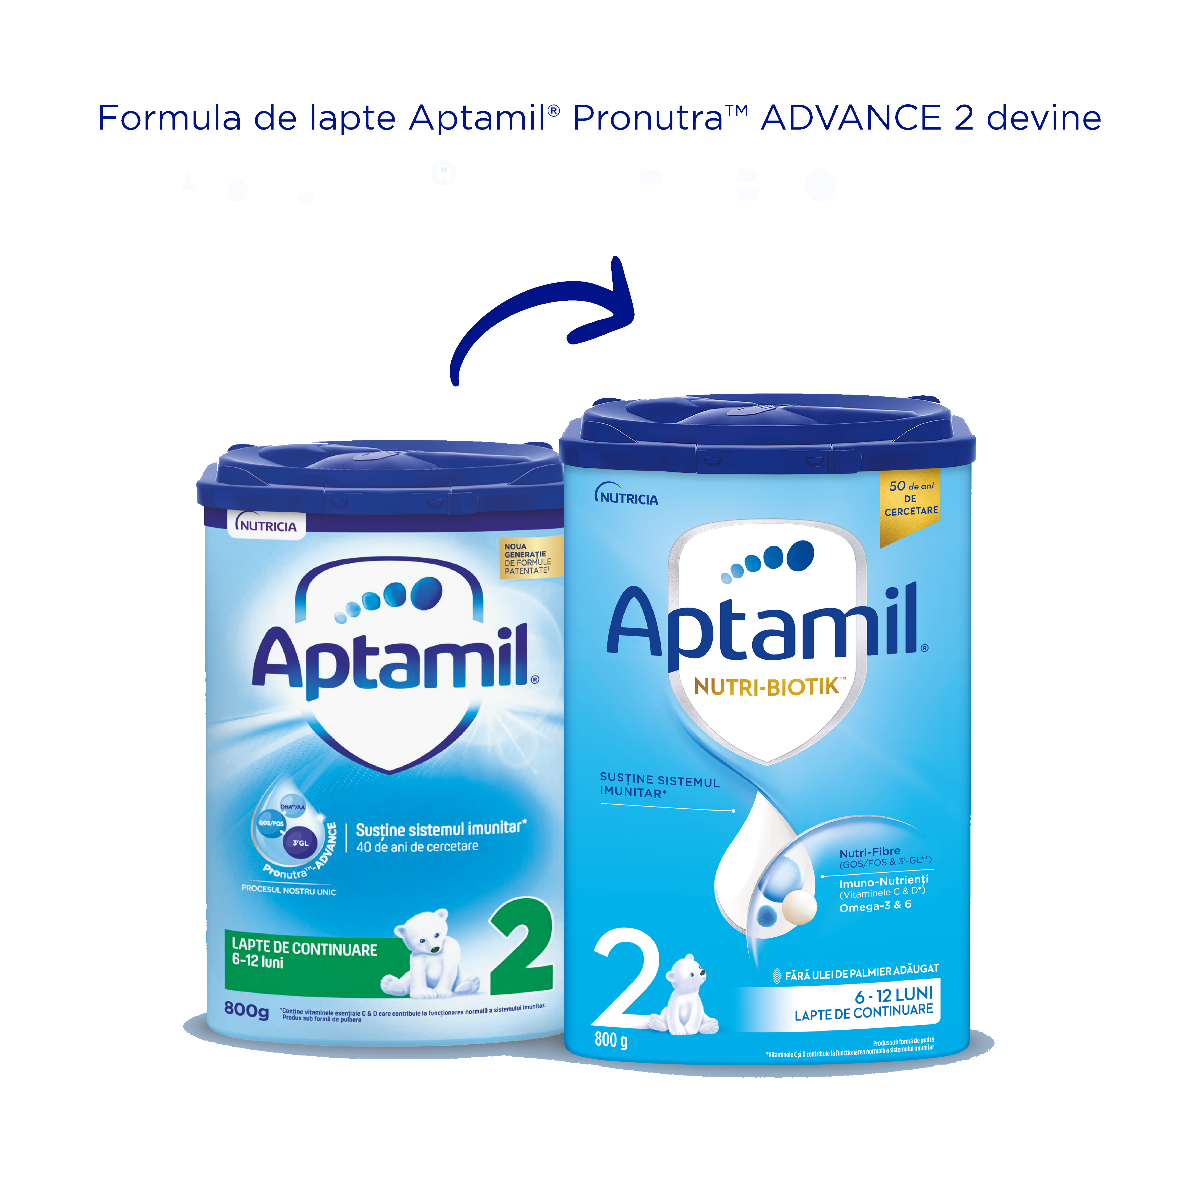 Lapte de continuare 6-12 luni NUTRI-BIOTIK 2, 800g, Aptamil